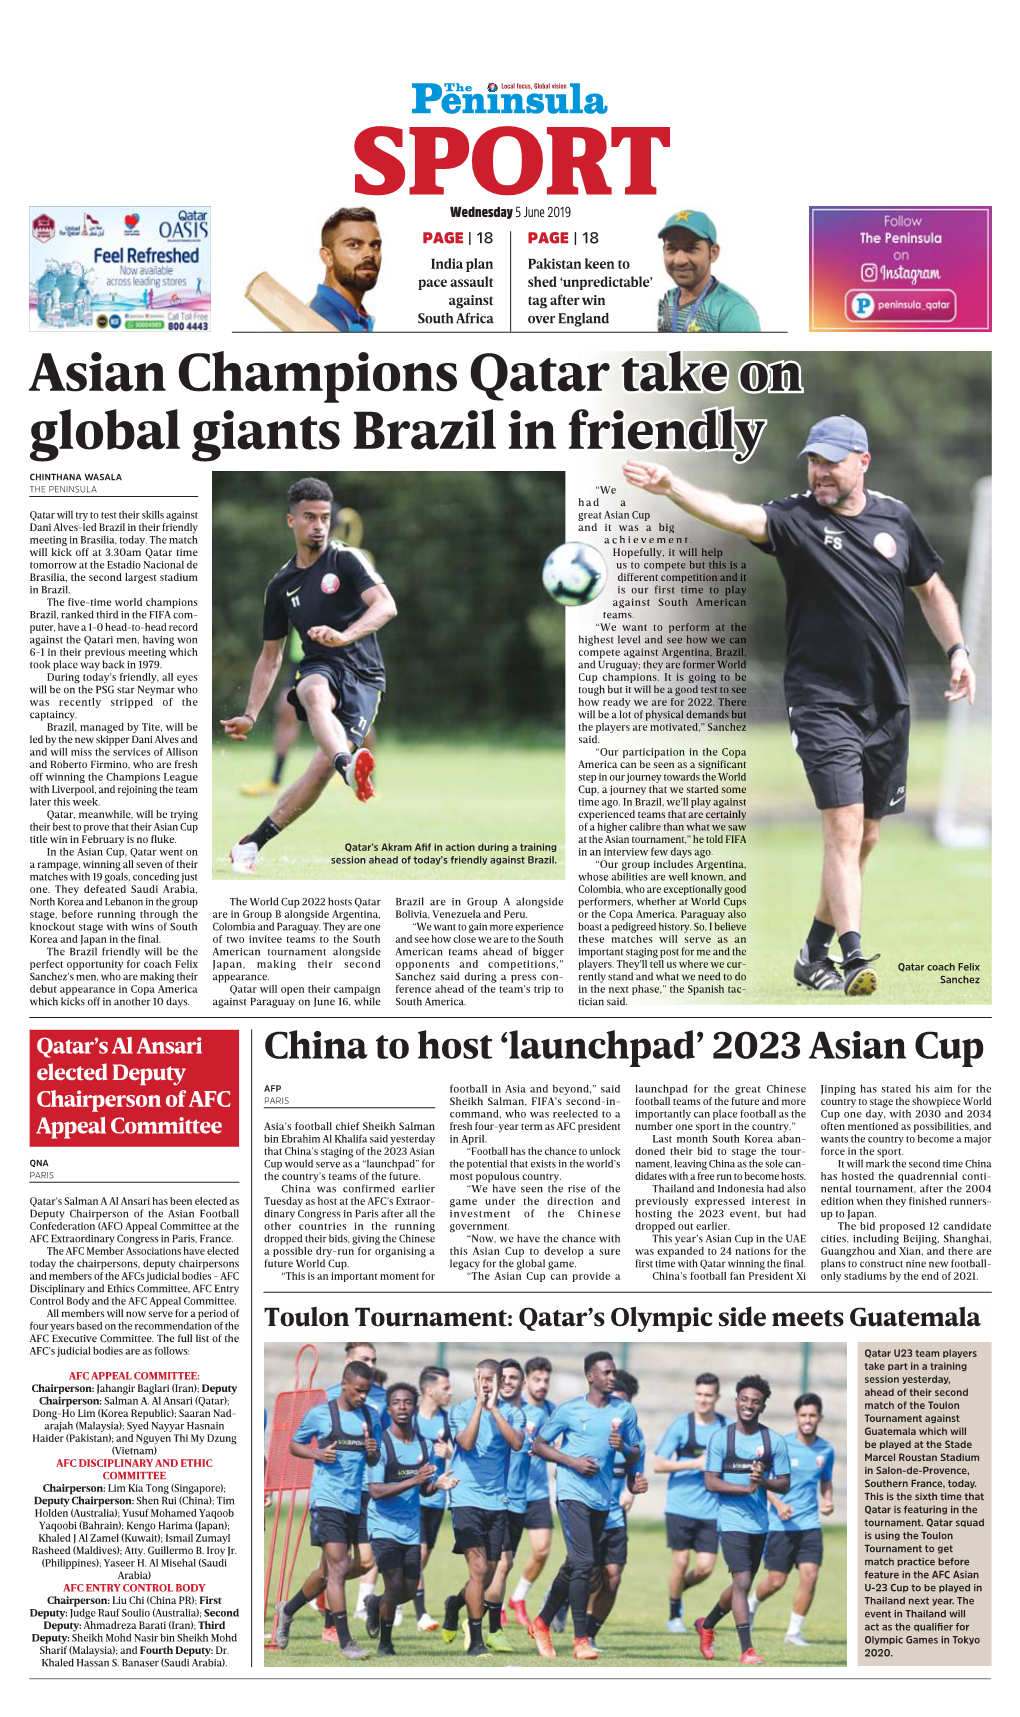 Asian Champions Qatar Take on Global Giants Brazil in Friendly